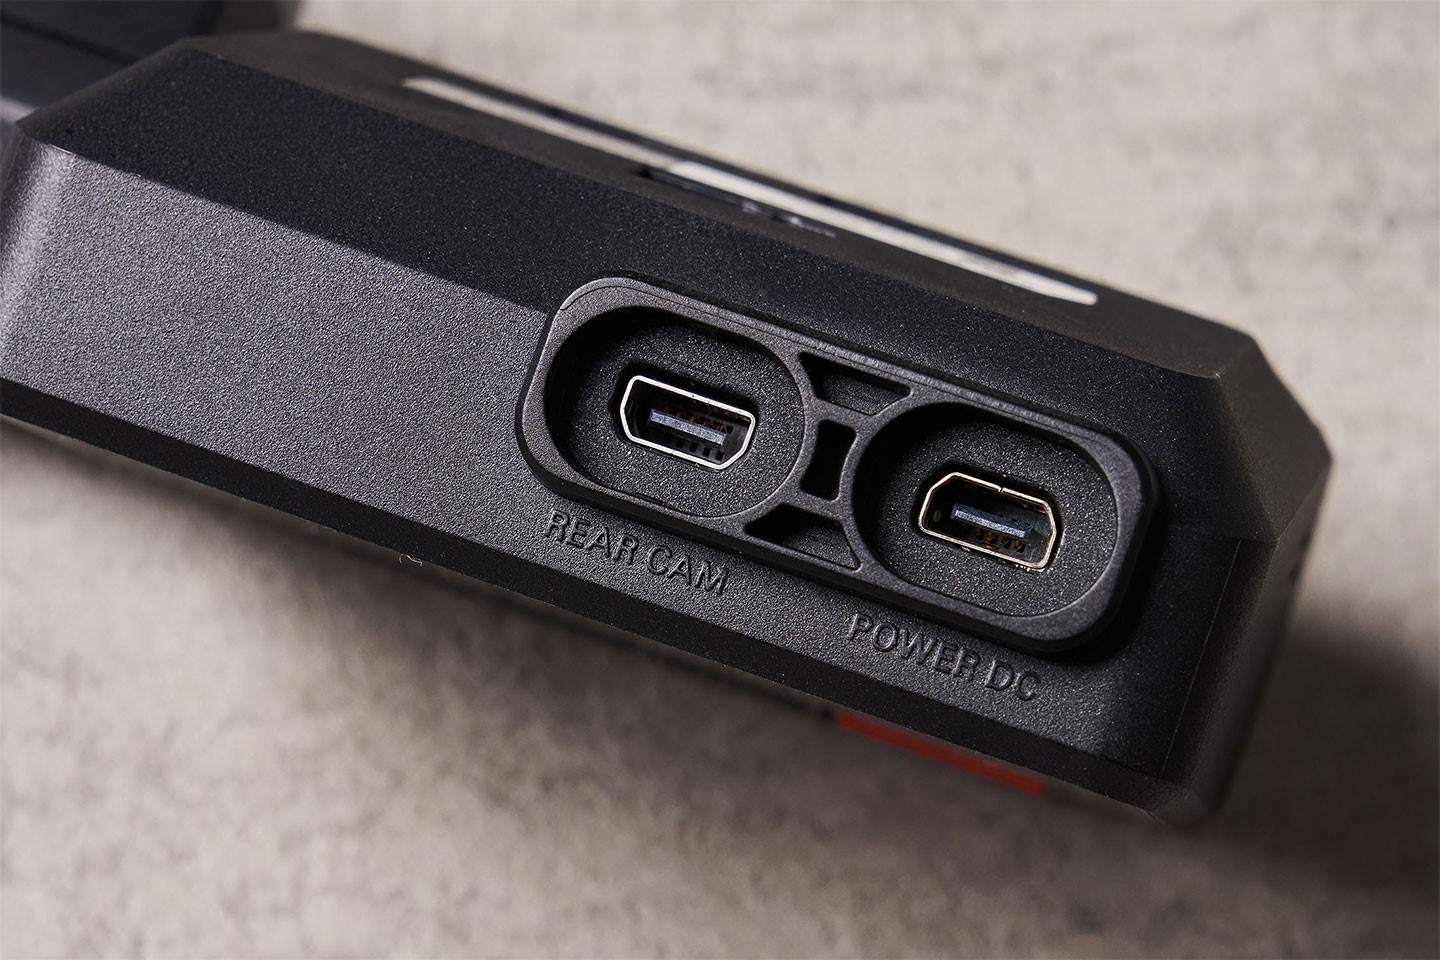 955W 主機頂部規劃兩組 mini USB 接口，分別對應後鏡的連結線以及供電線。